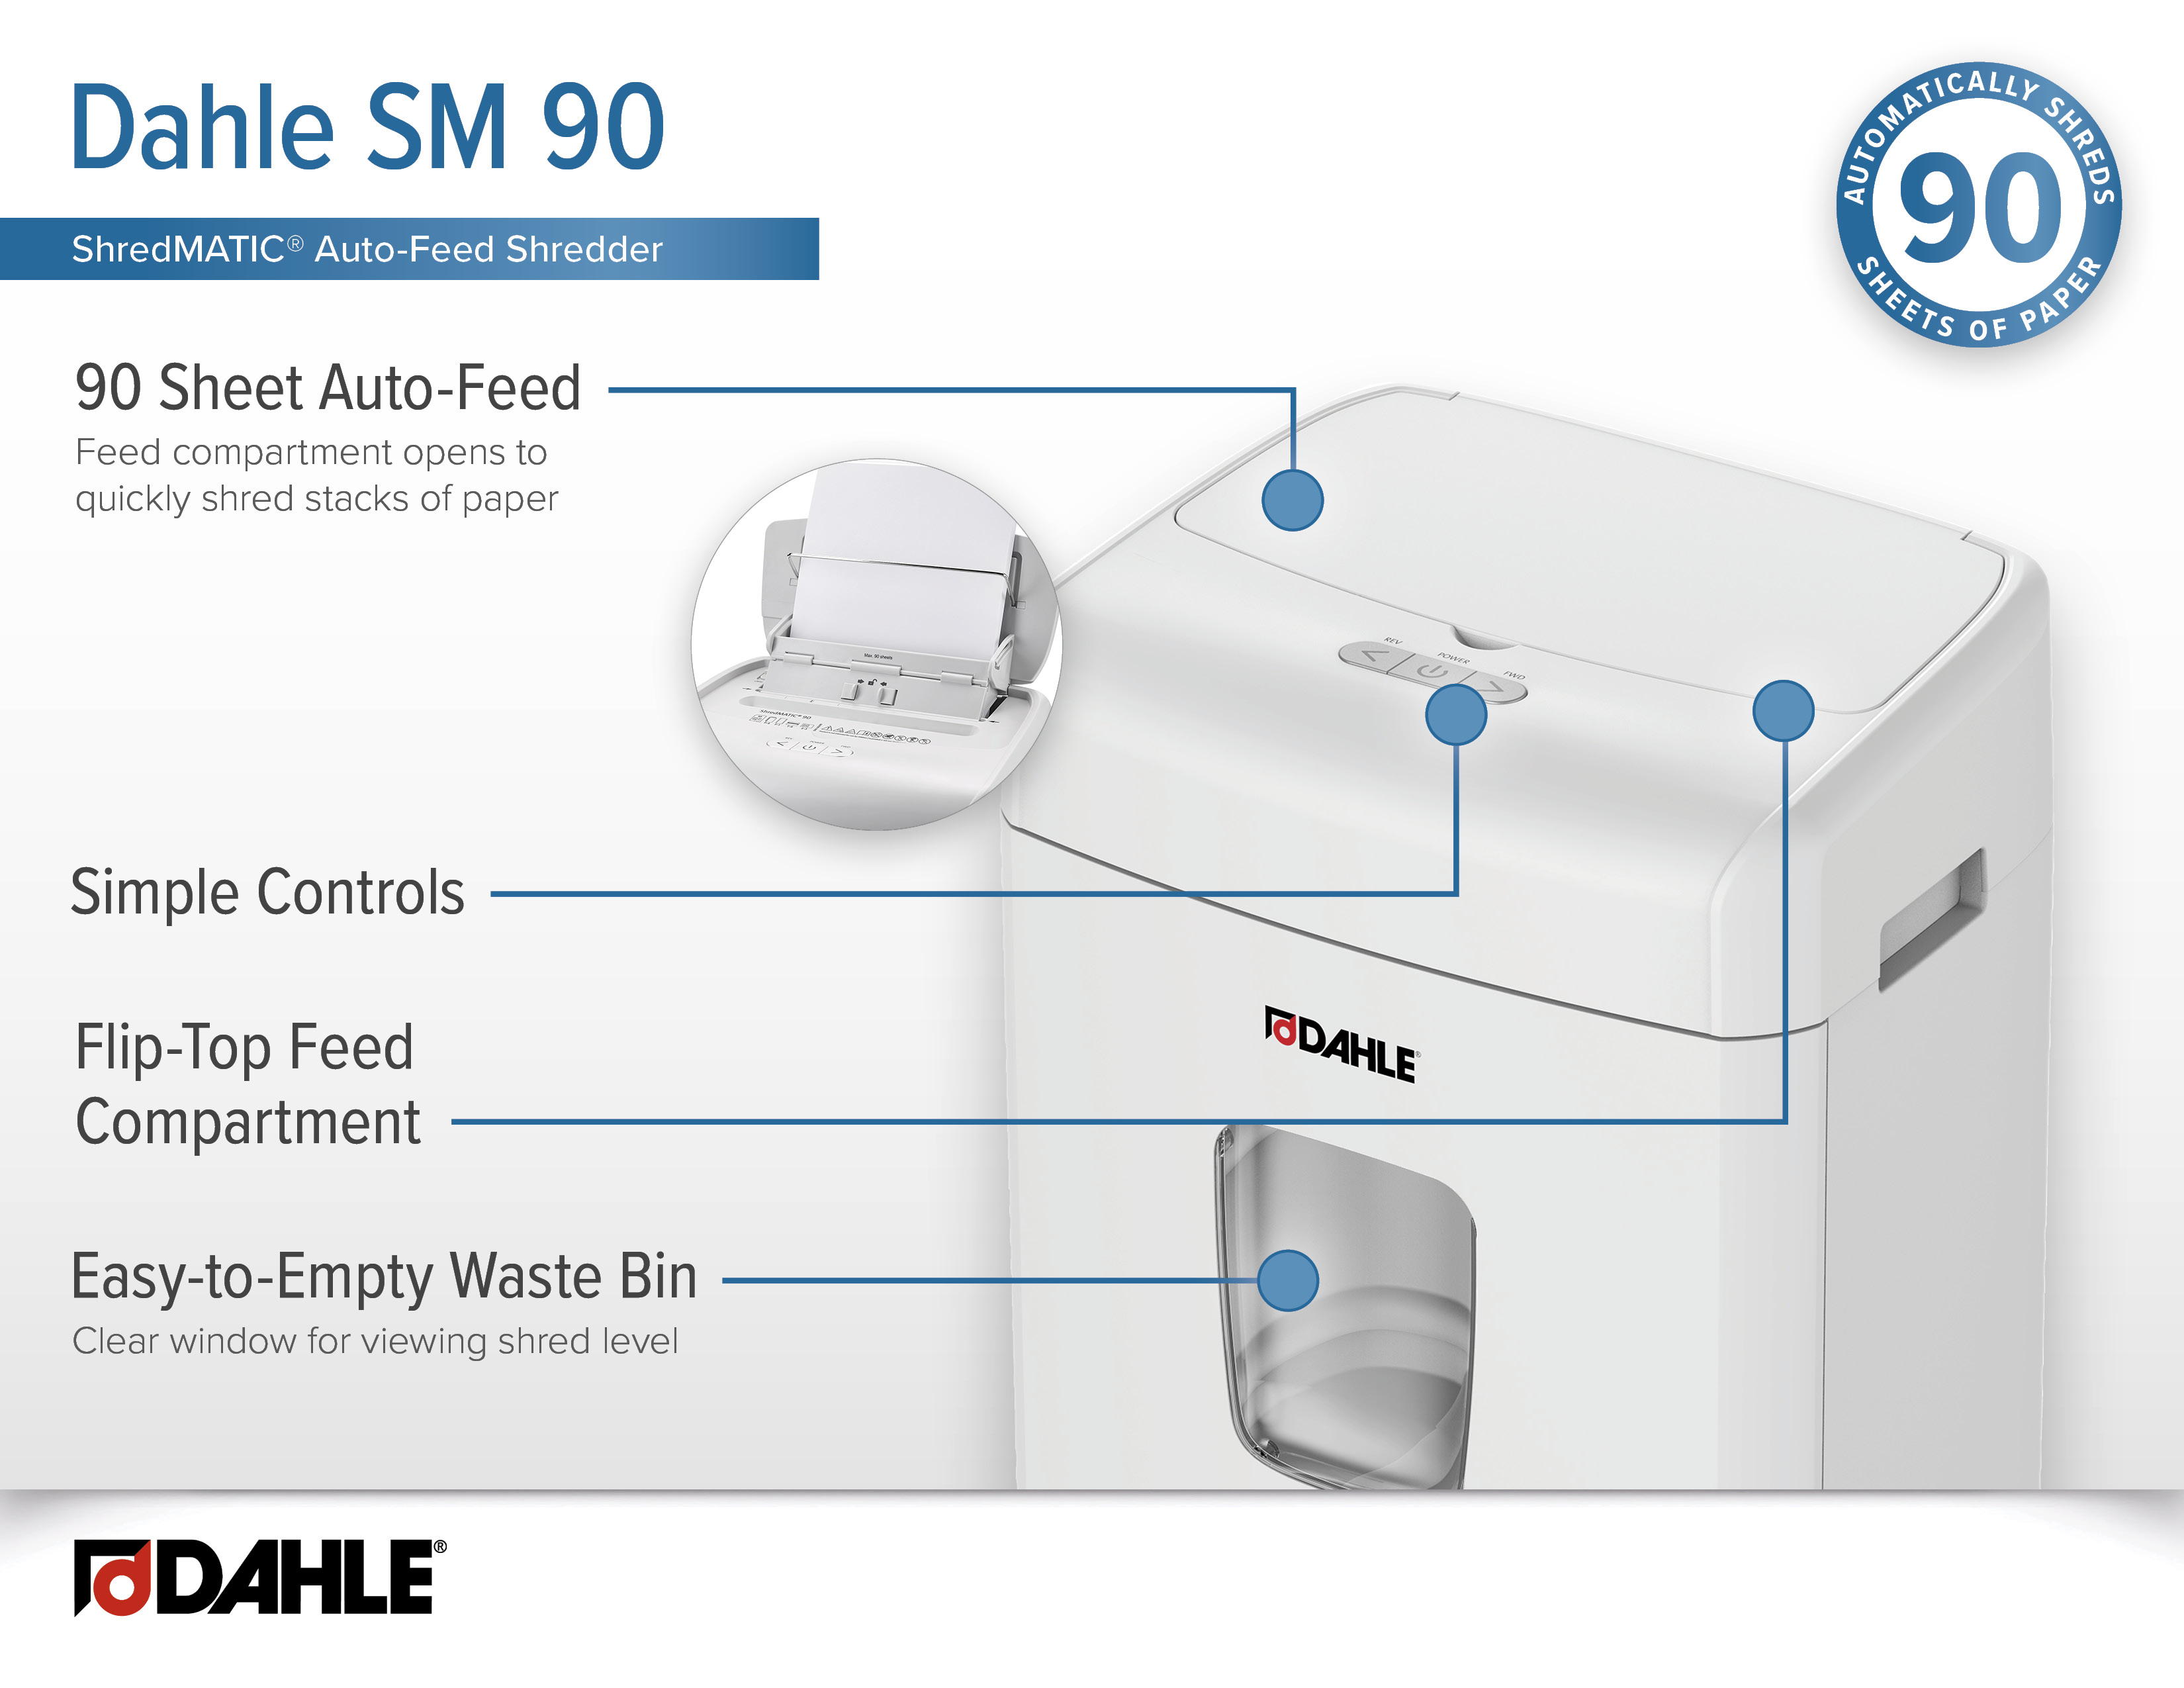 Dahle ShredMATIC® SM 90 Auto-Feed Shredder Infographic